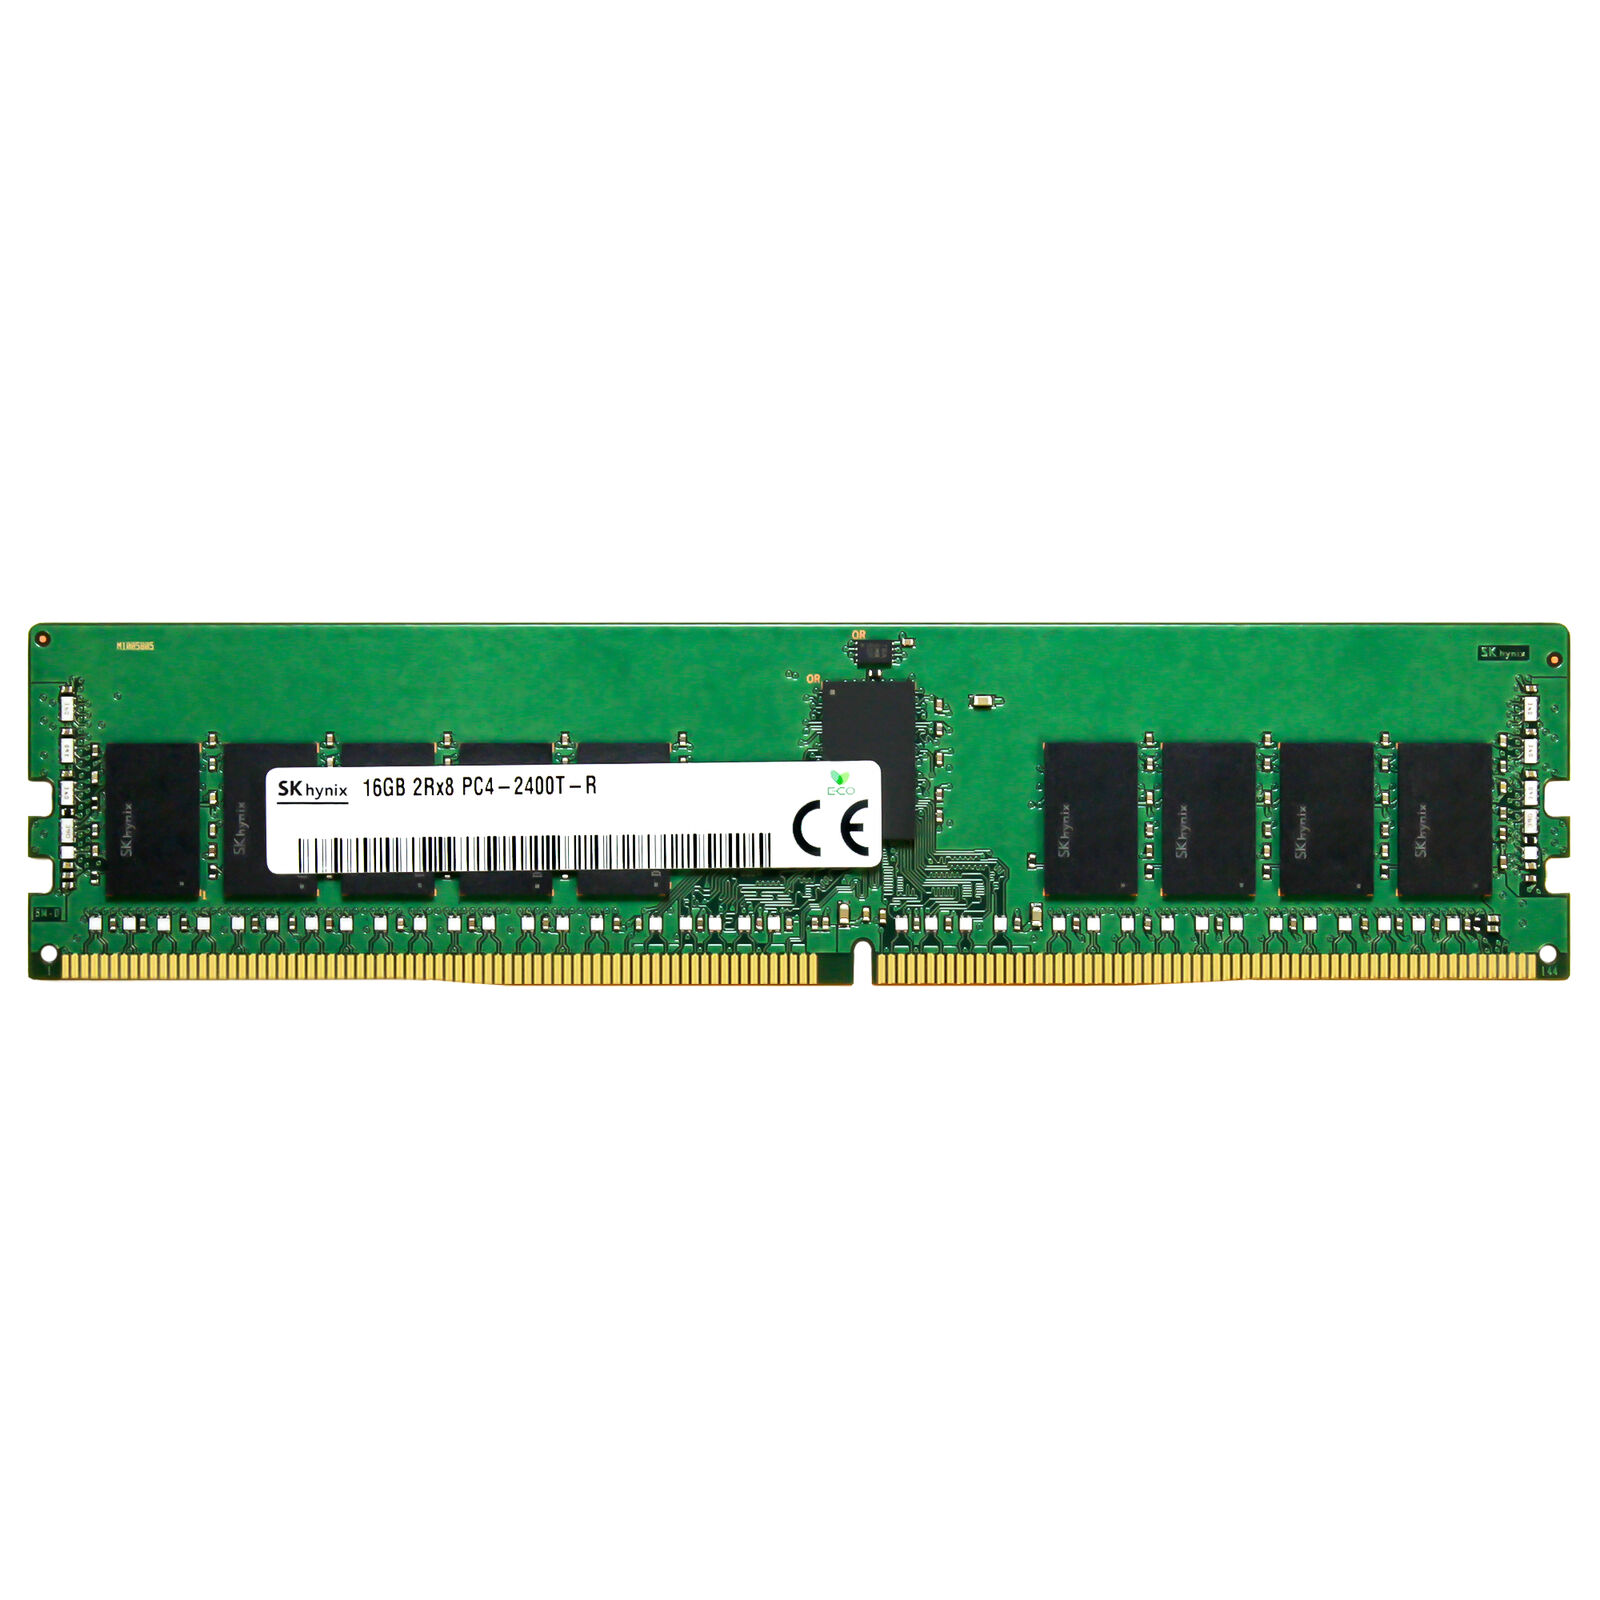 Hynix 16GB 2Rx8 PC4-2400T RDIMM DDR4-19200 ECC REG Registered Server Memory RAM